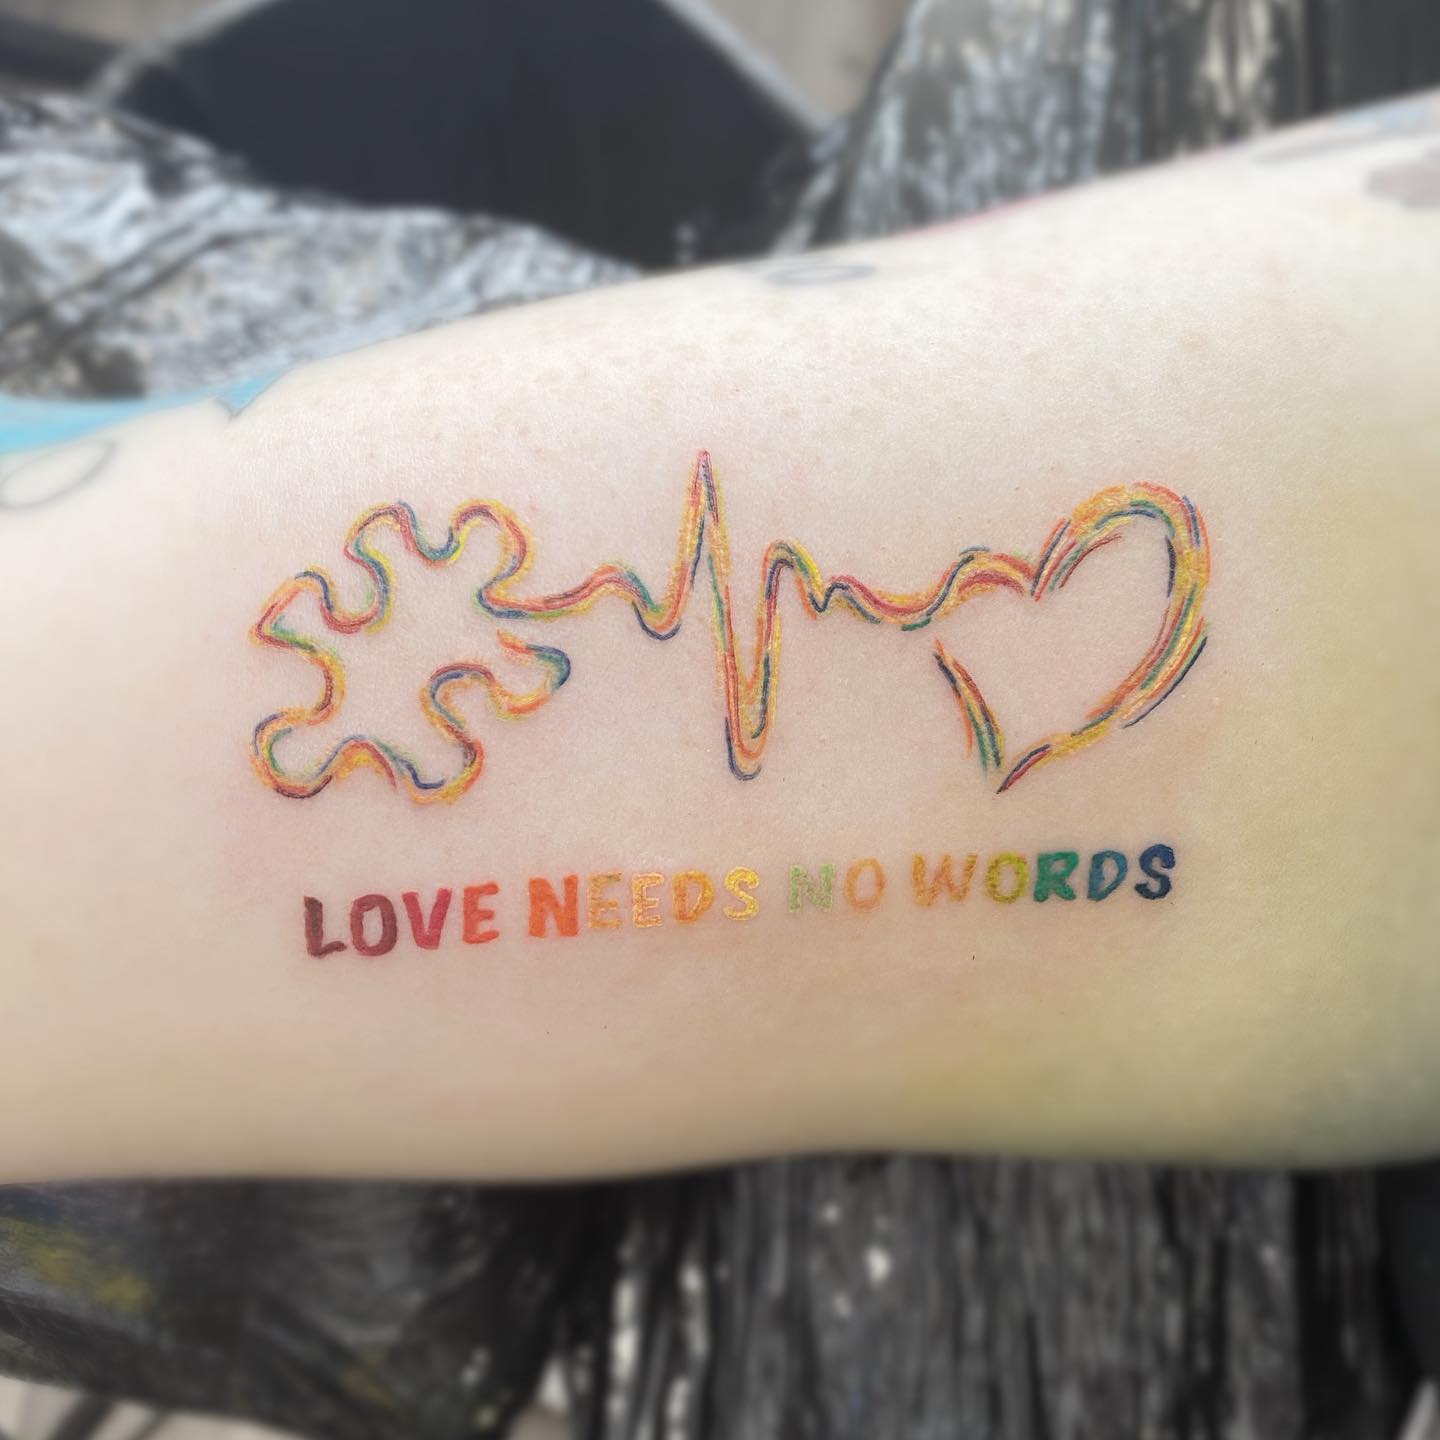 Autism Tattoos: 30+ Inspirational Design Ideas to Raise Awareness - 100 Tattoos